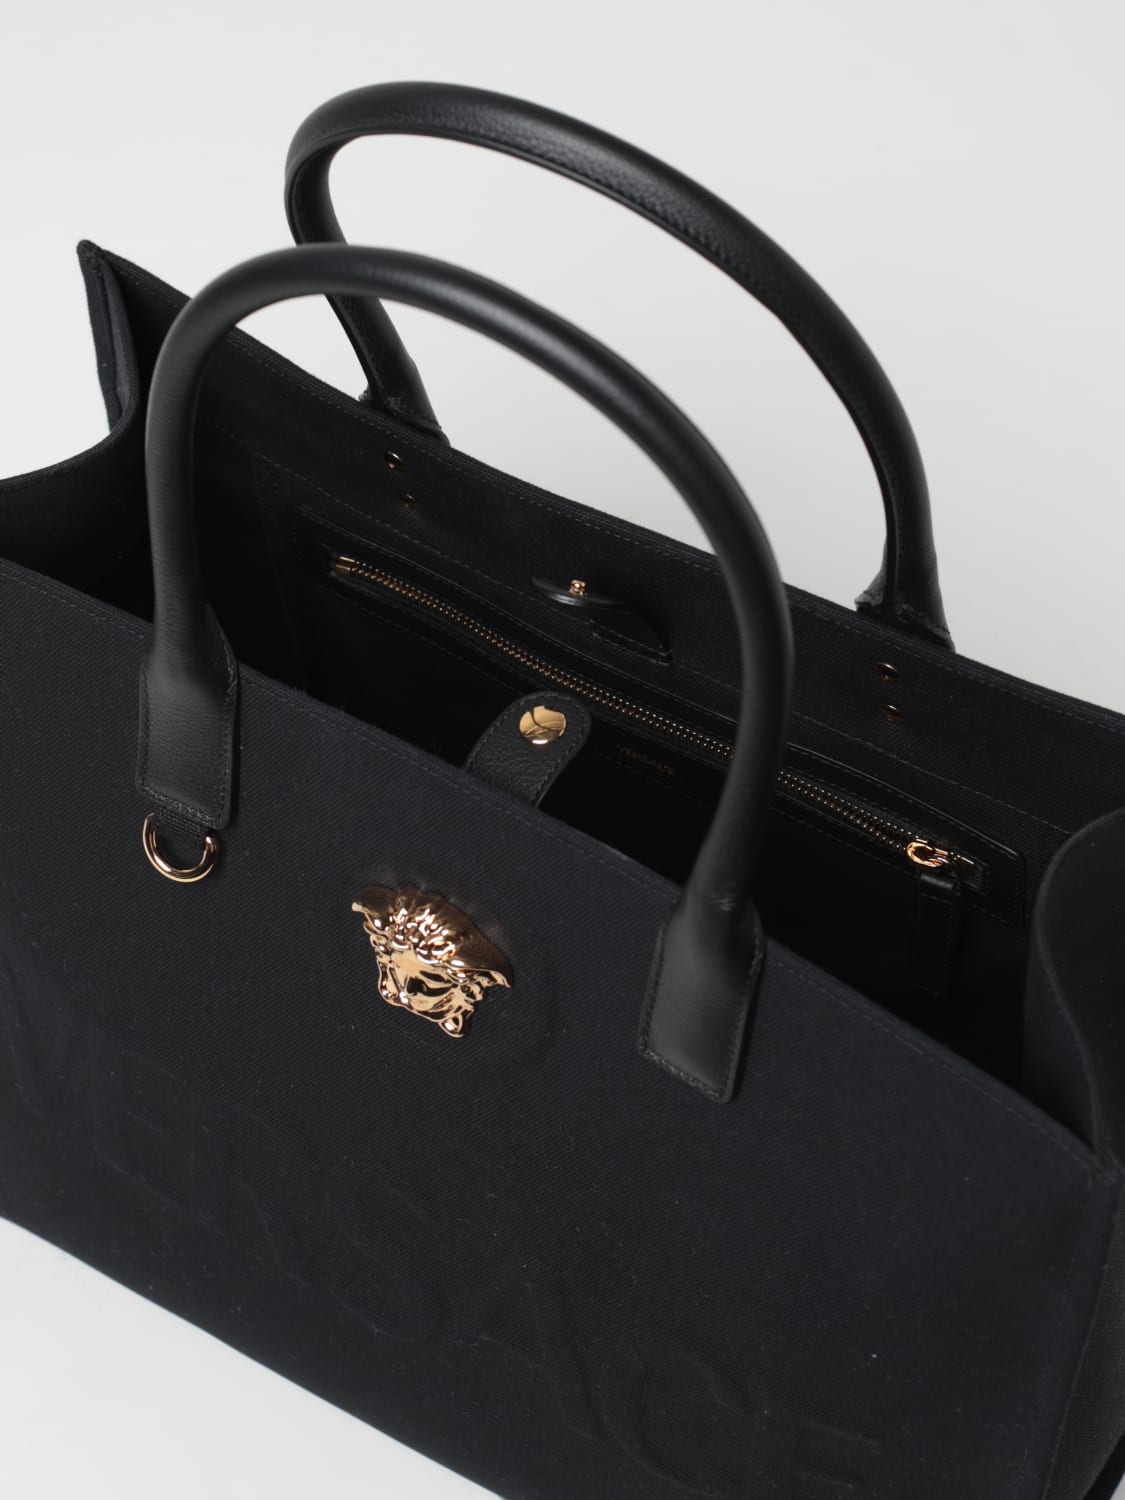 Versace Black La Medusa Tote Bag